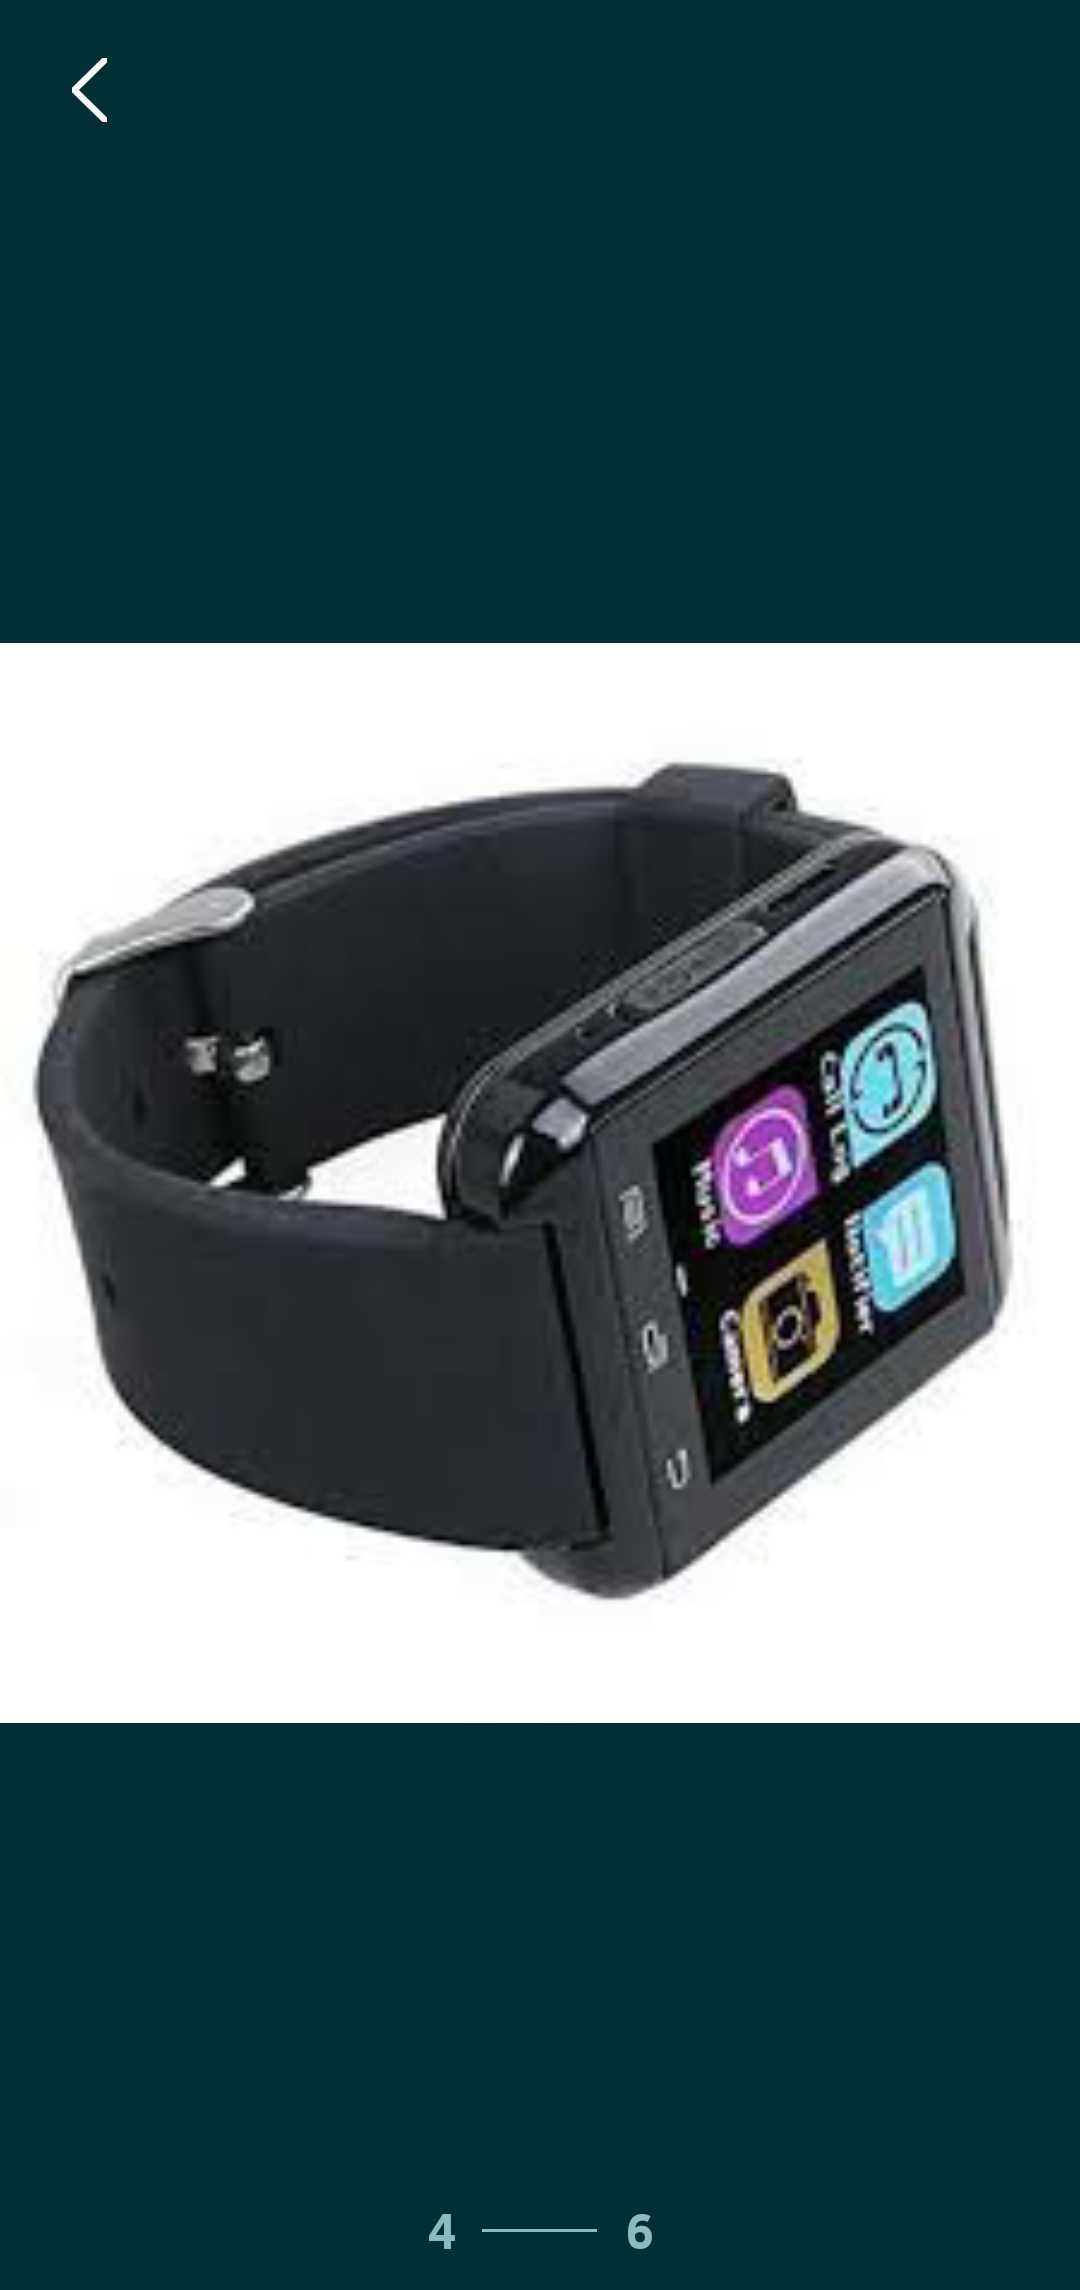 Ceas-Smartwatch,LCD 1.44 Inch,Notificari,Bluetooth,nou